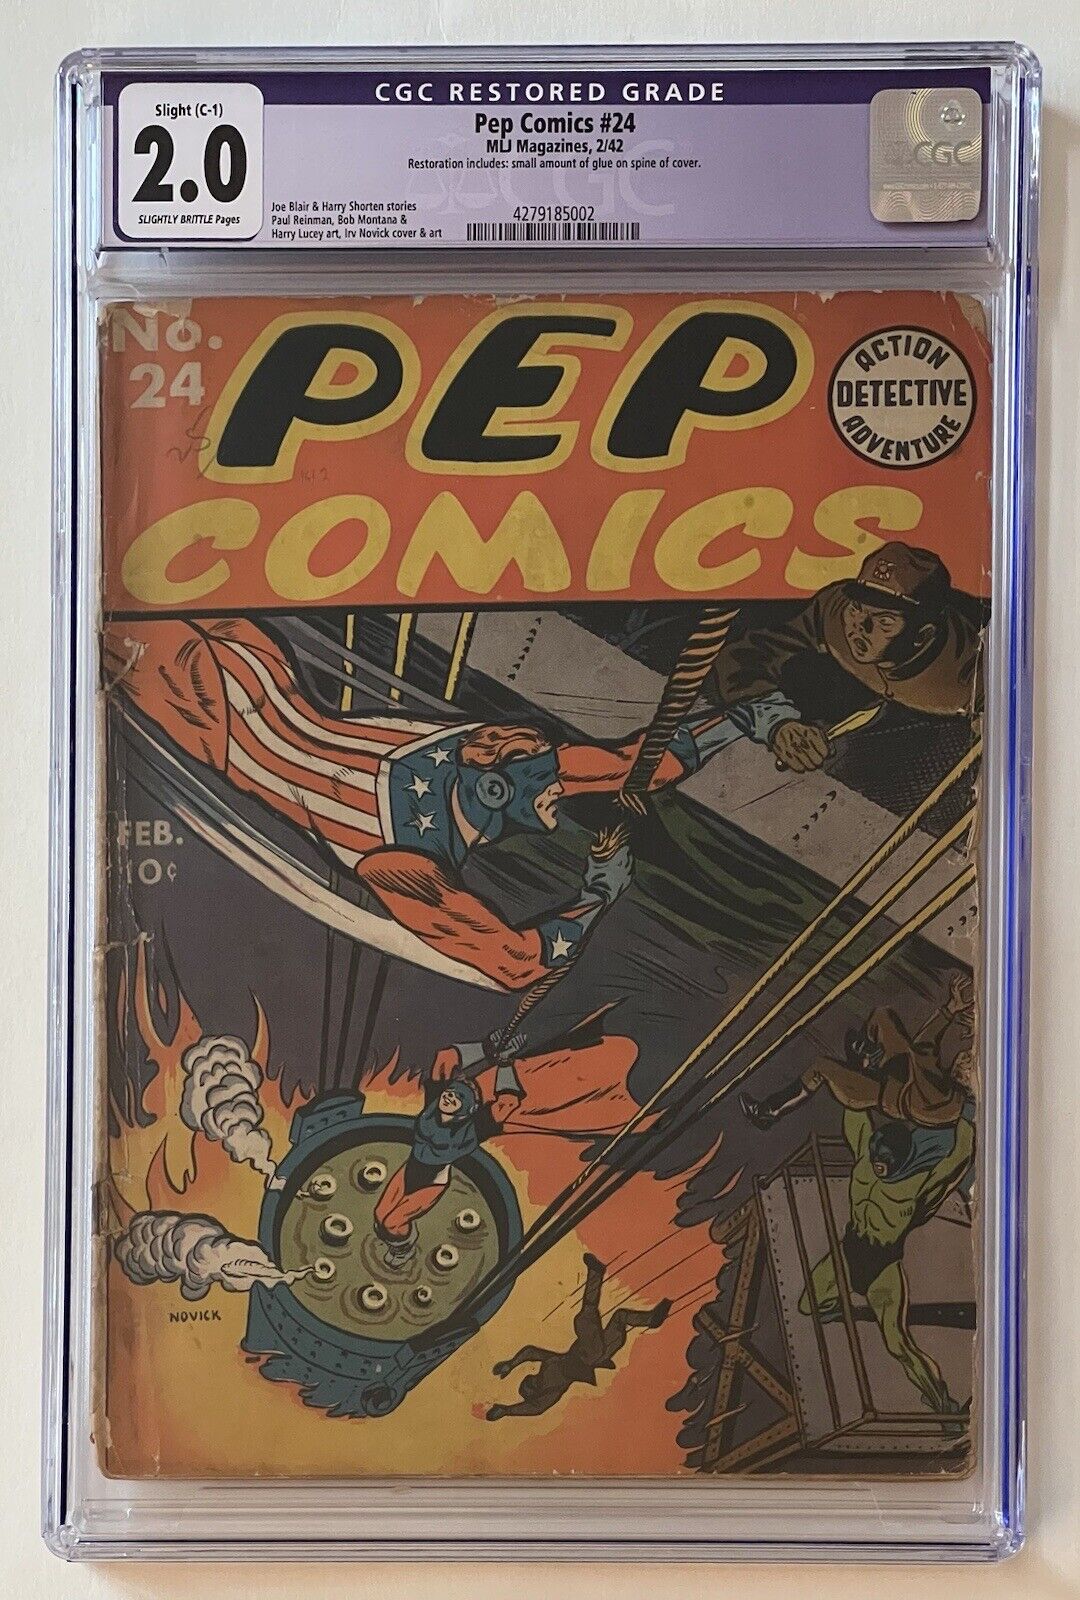 Pep Comics #24 (1942) CGC 2.0 Restored (C-1) - Early Archie